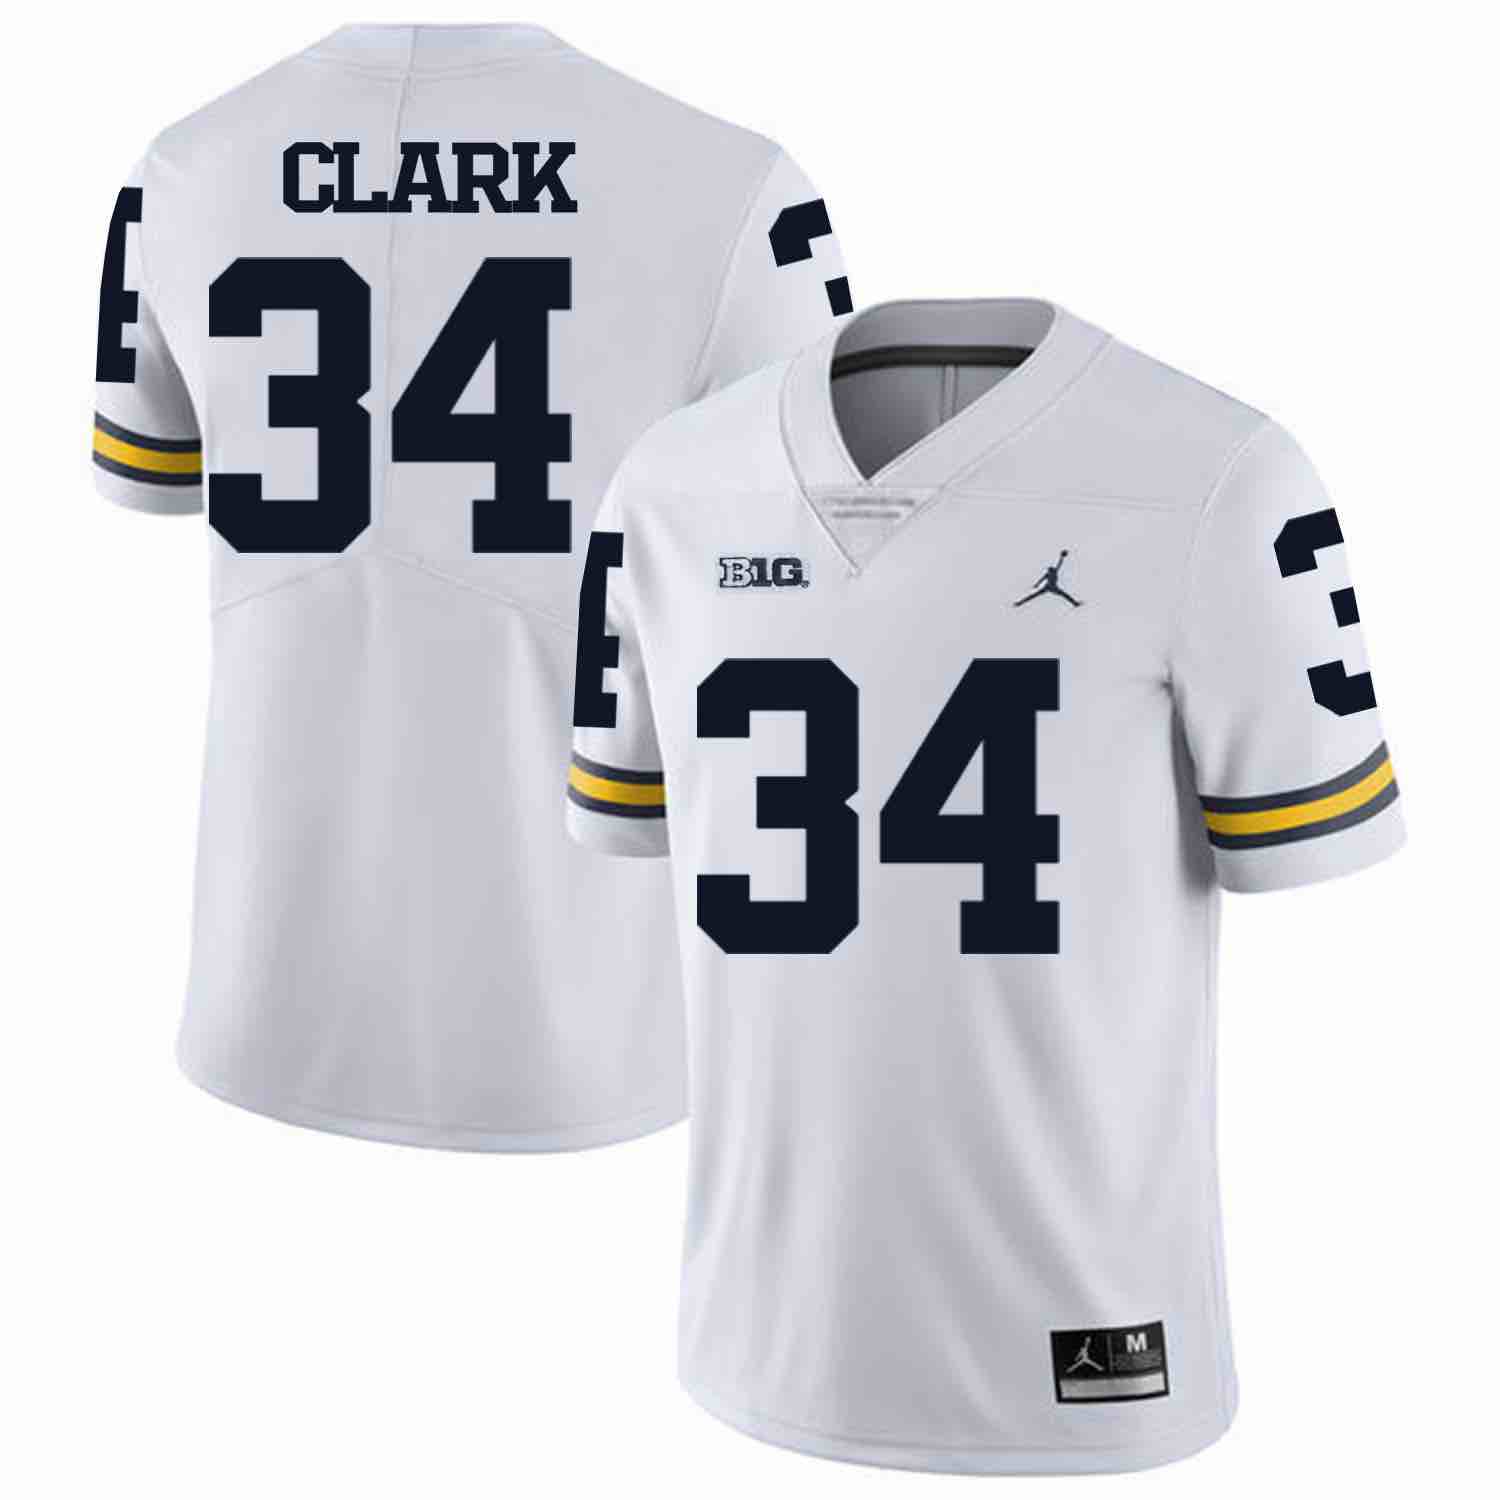 NCAA Michigan Wolverines #34 Clark White Football Jersey